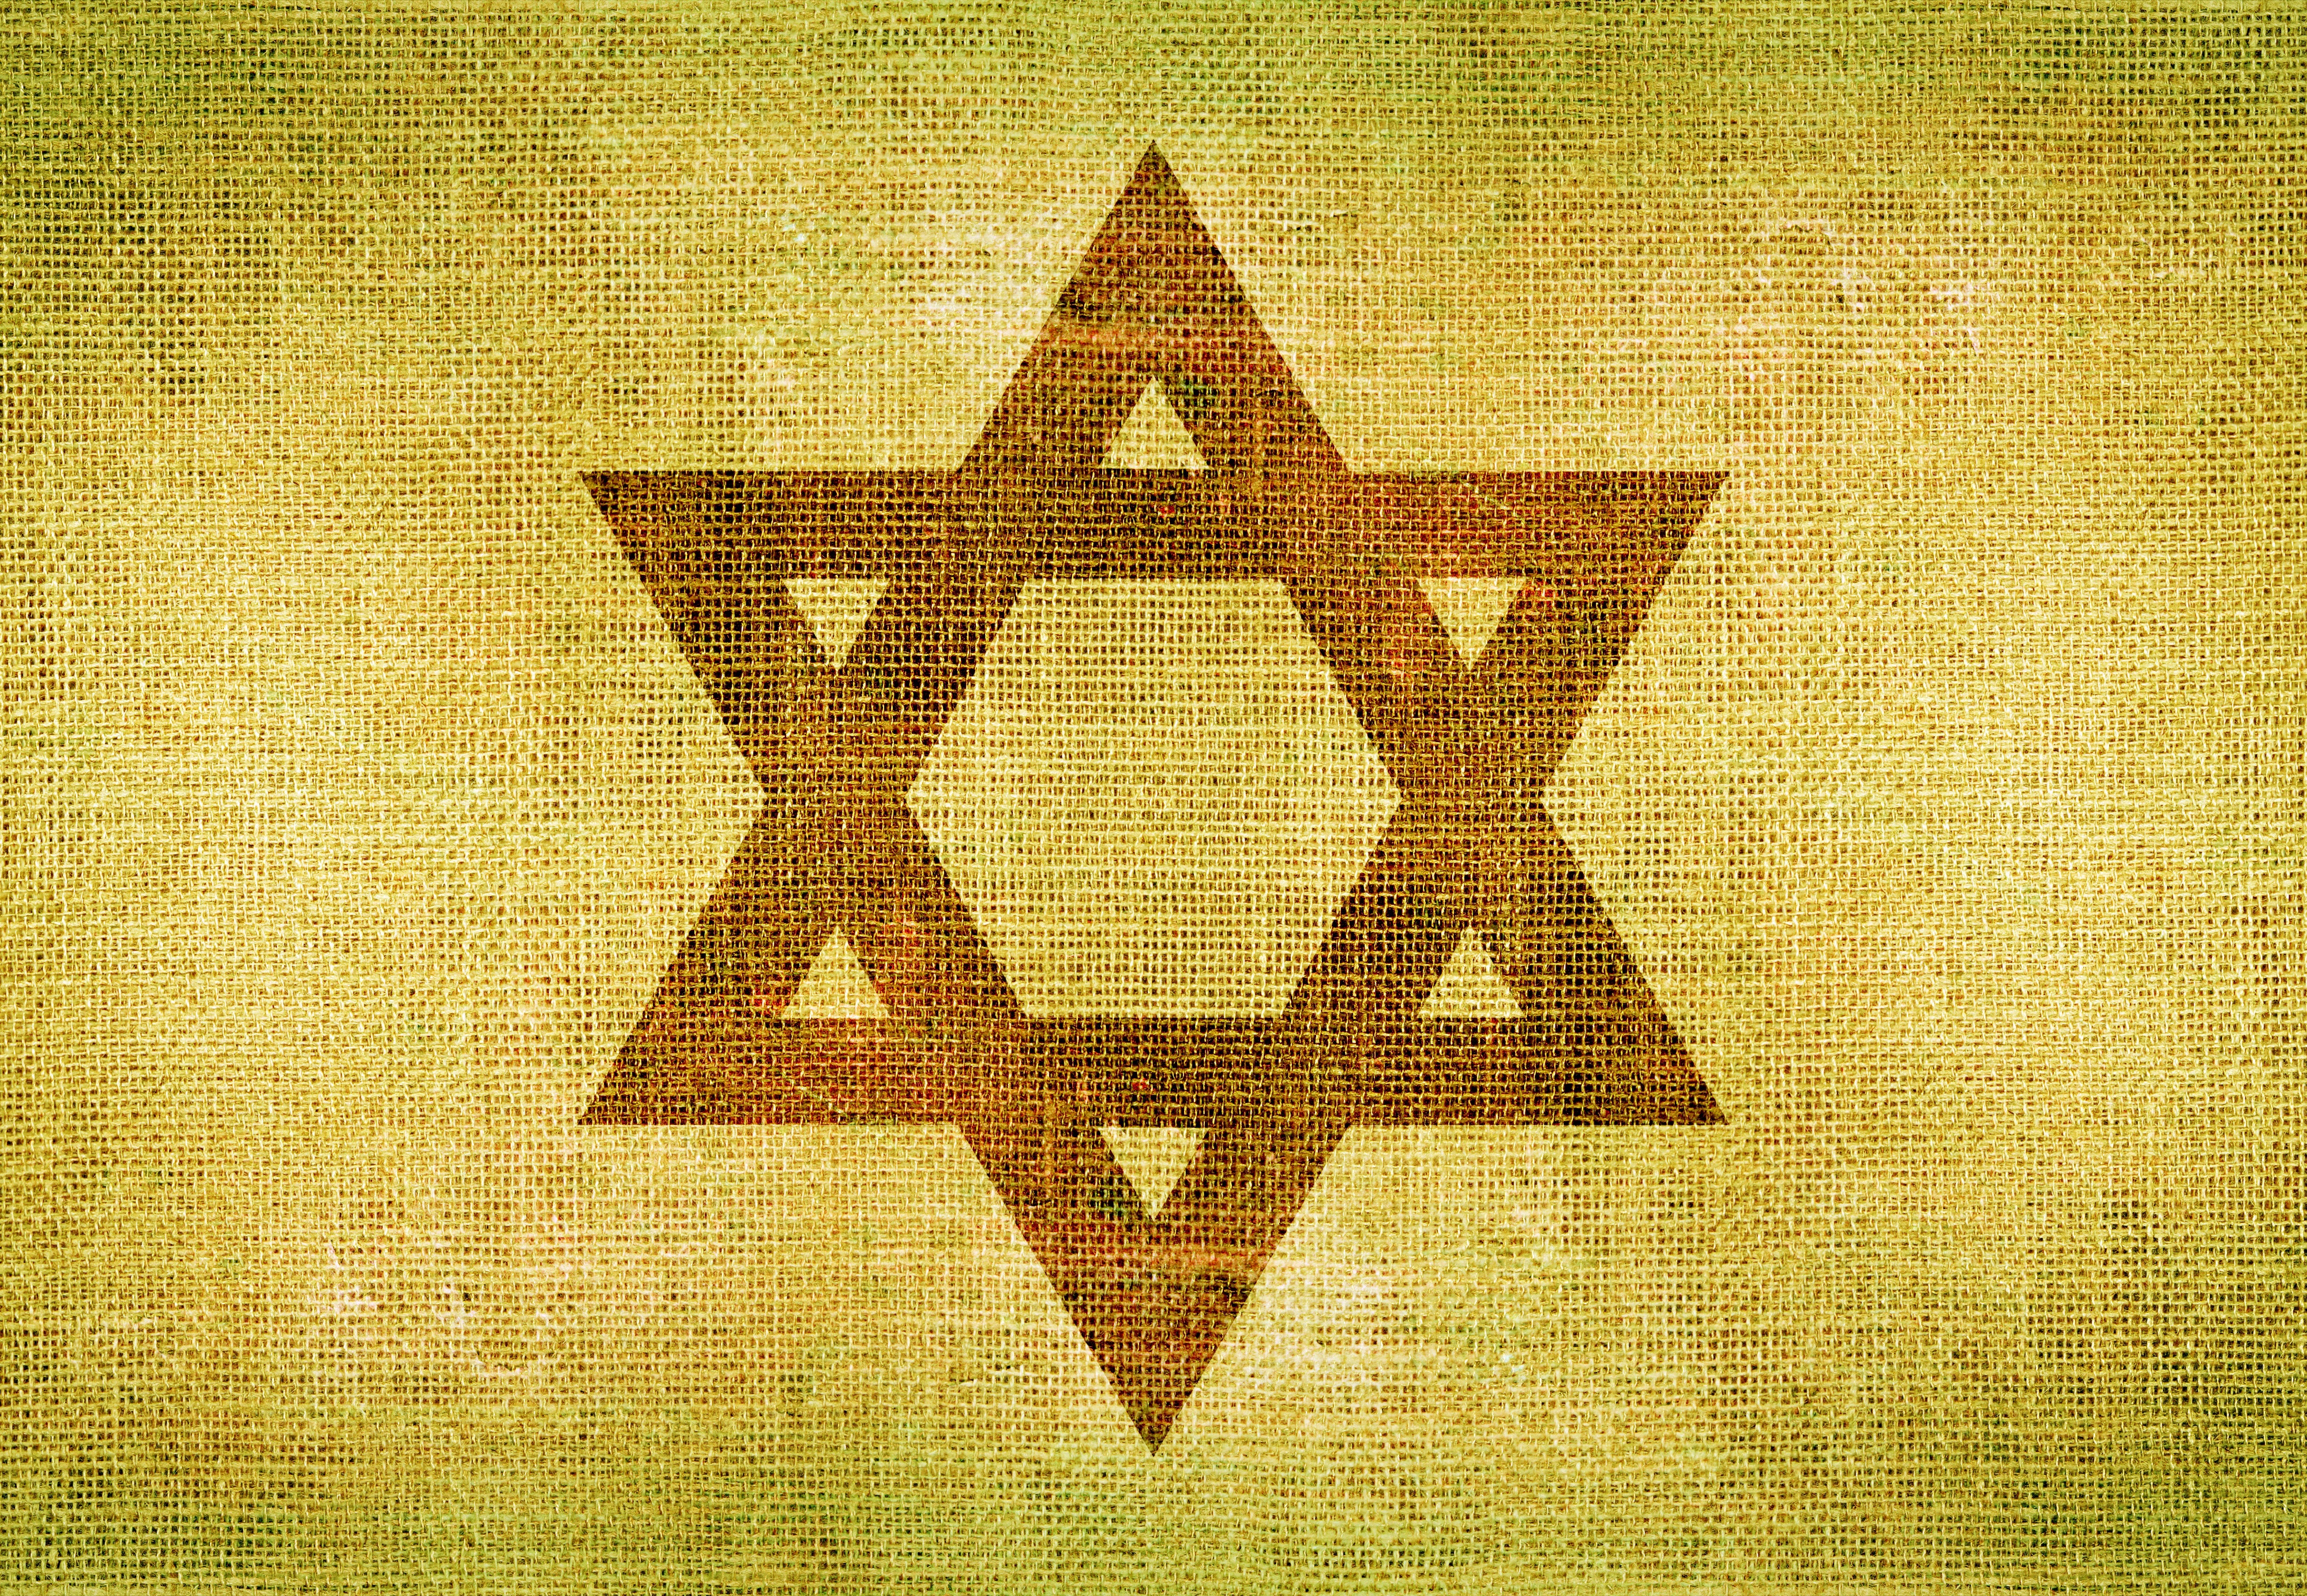 Star of David on Canvas. Jewish Symbol Background Illustration.